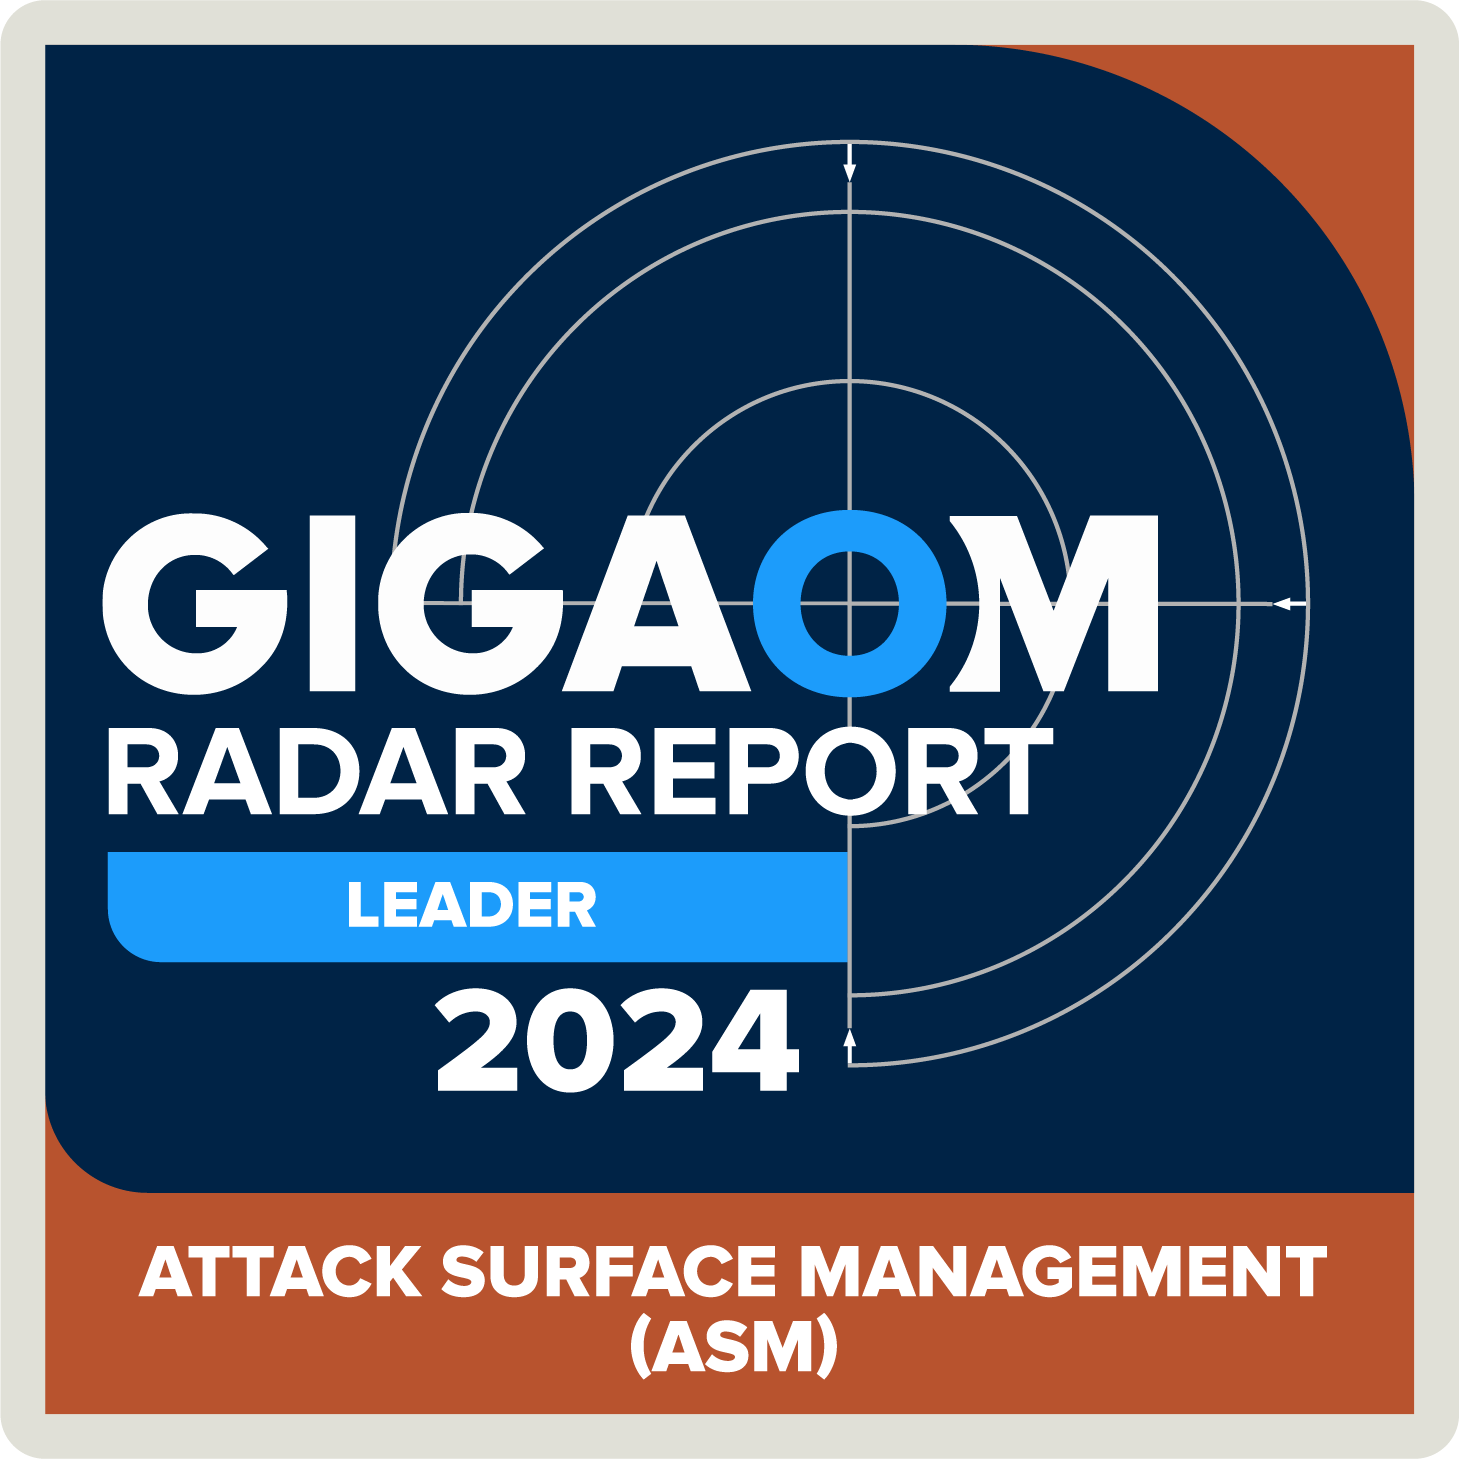 Gigaom Radar Award badge 2024 for the Attack Surface Managment leader.